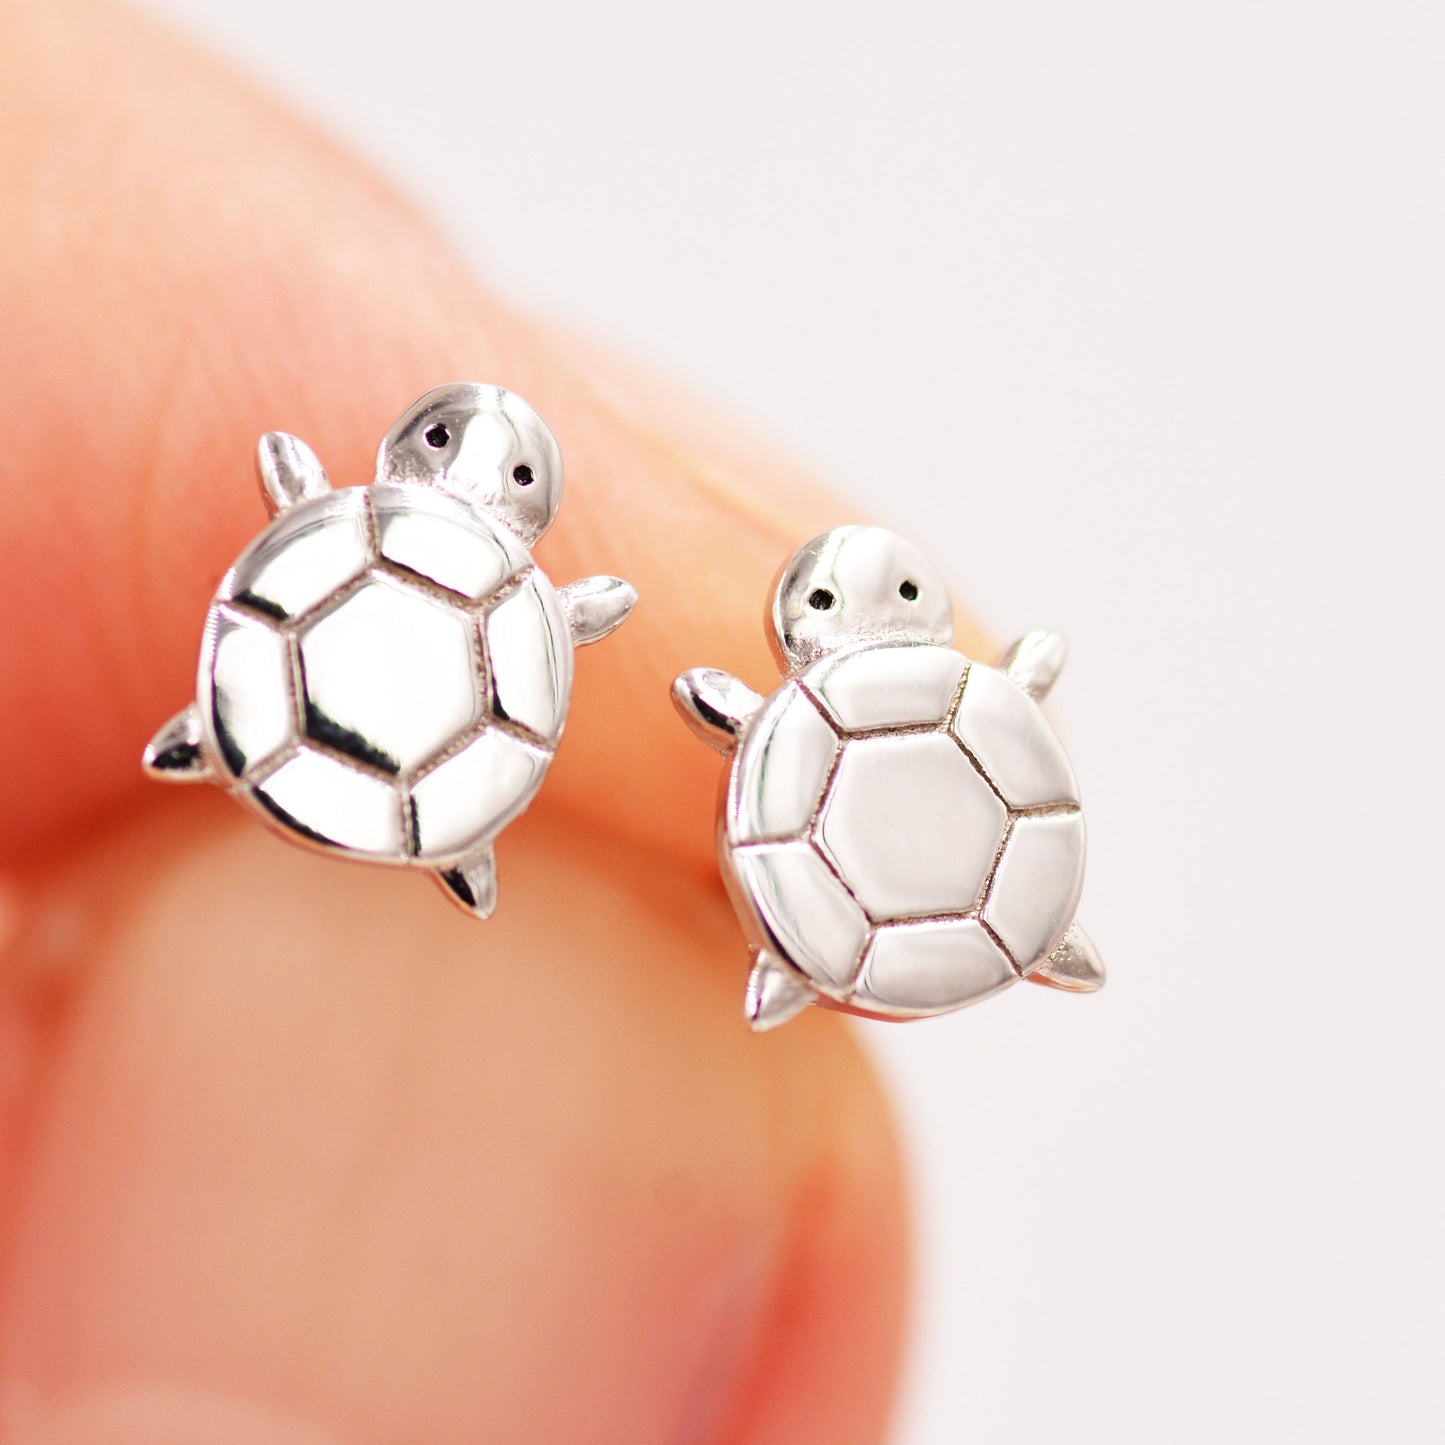 Cute Little Turtle Stud Earrings in Sterling Silver - Animal Stud Earrings  - Nature Inspired  - Cute,  Fun, Whimsical